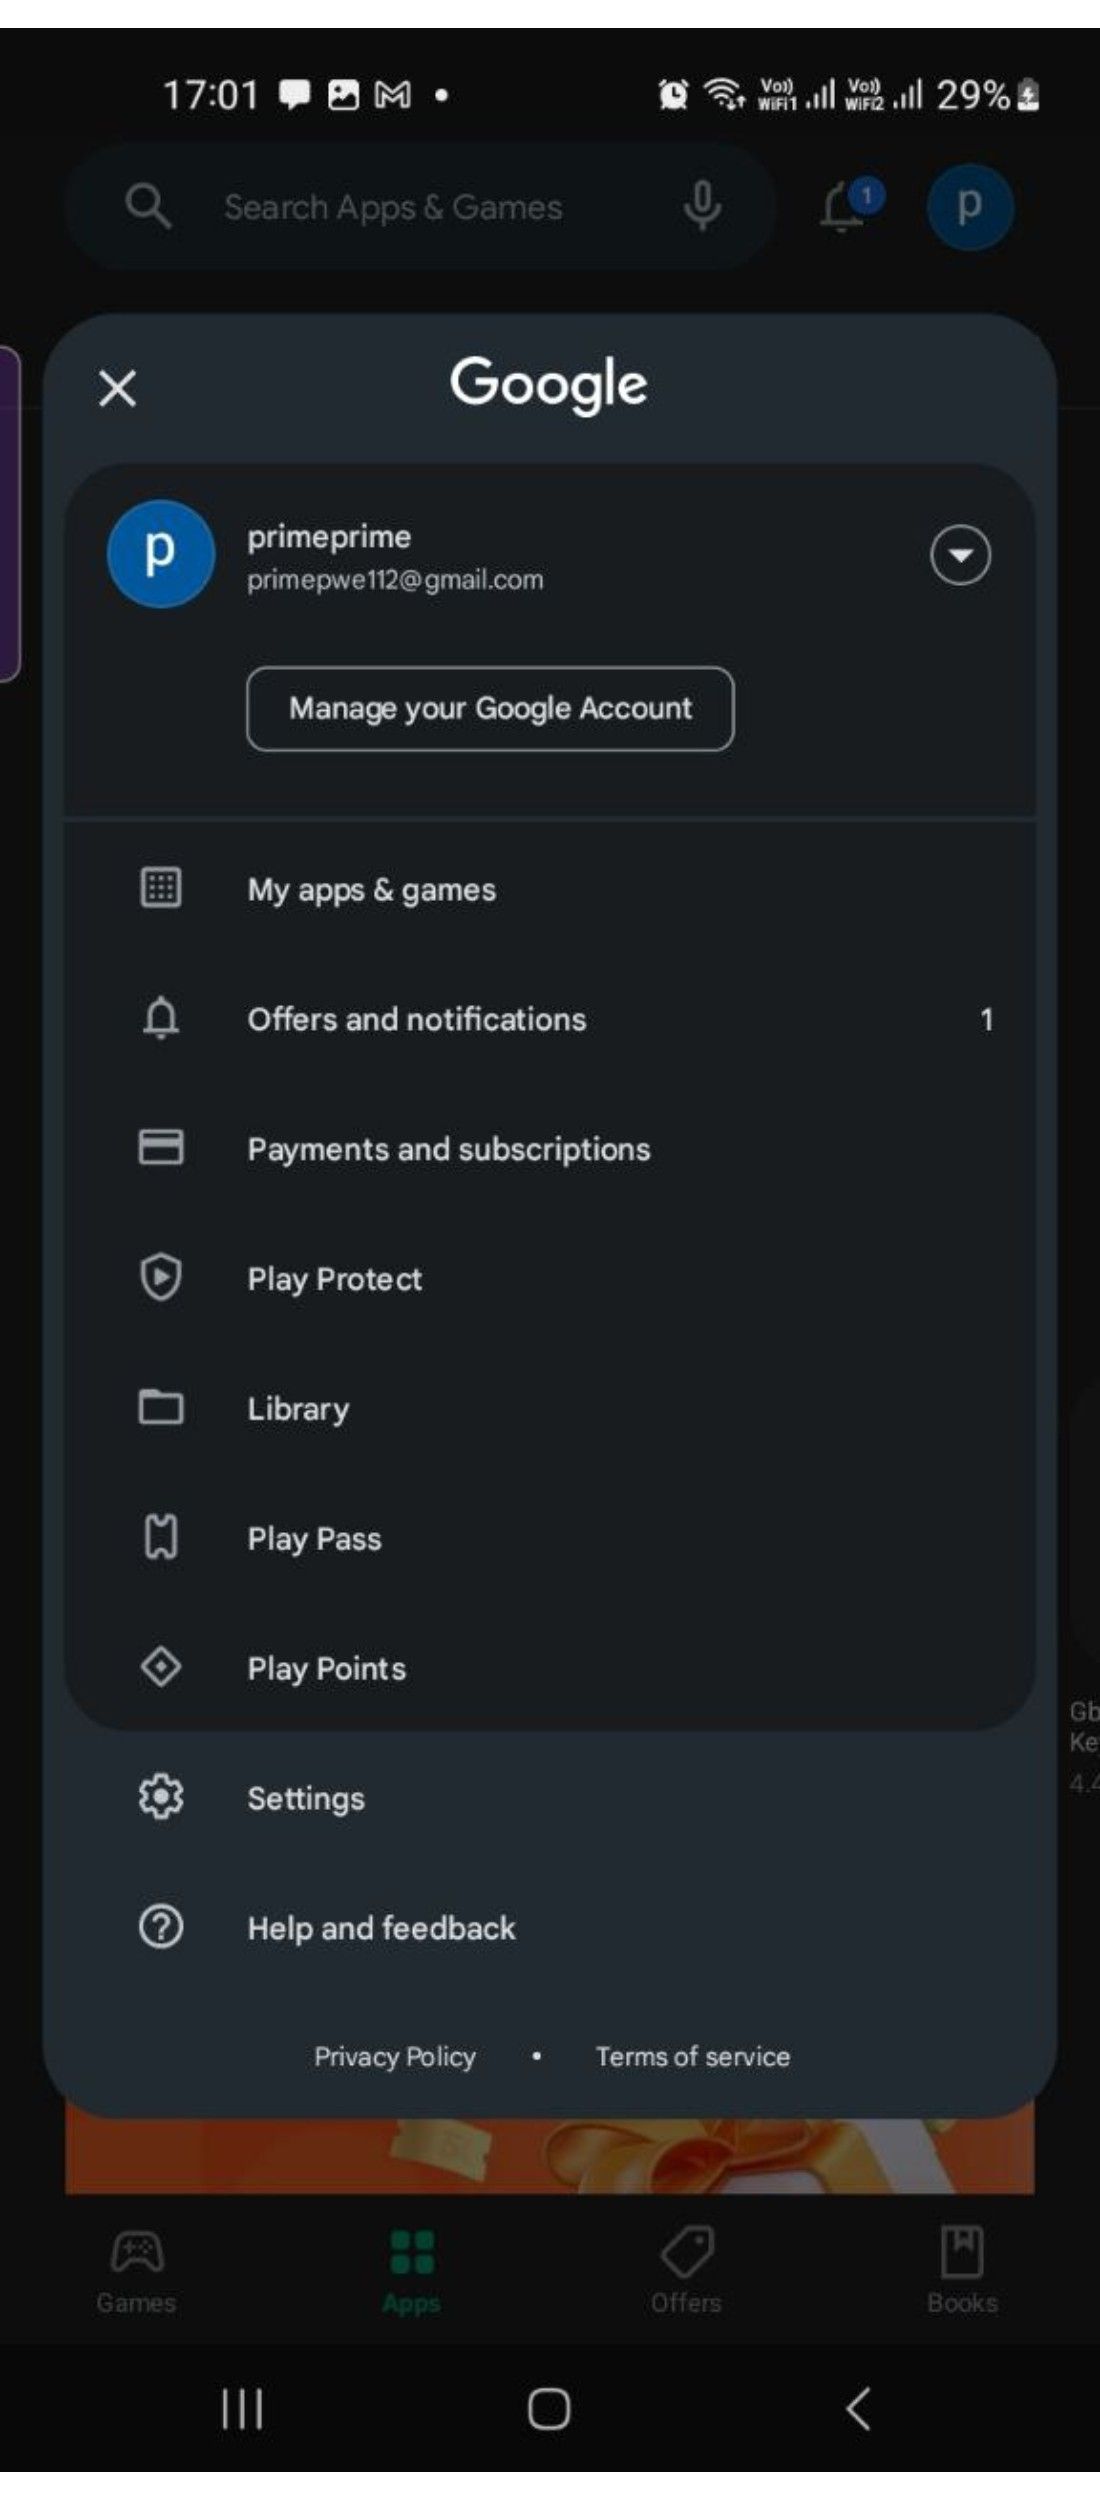 Google account settings